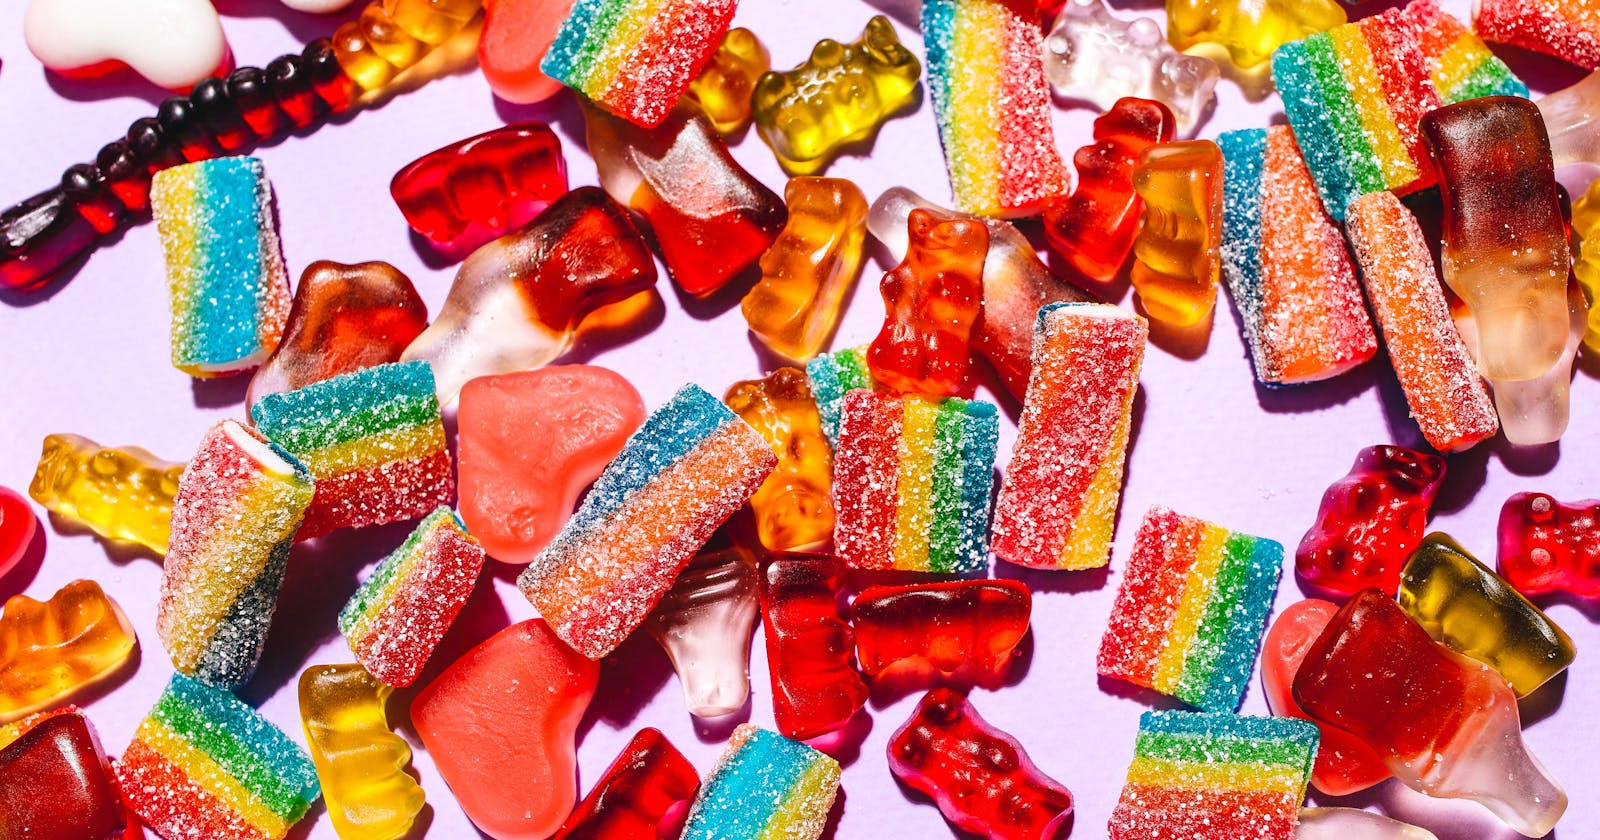 Analysis of Candy Ranking using Python